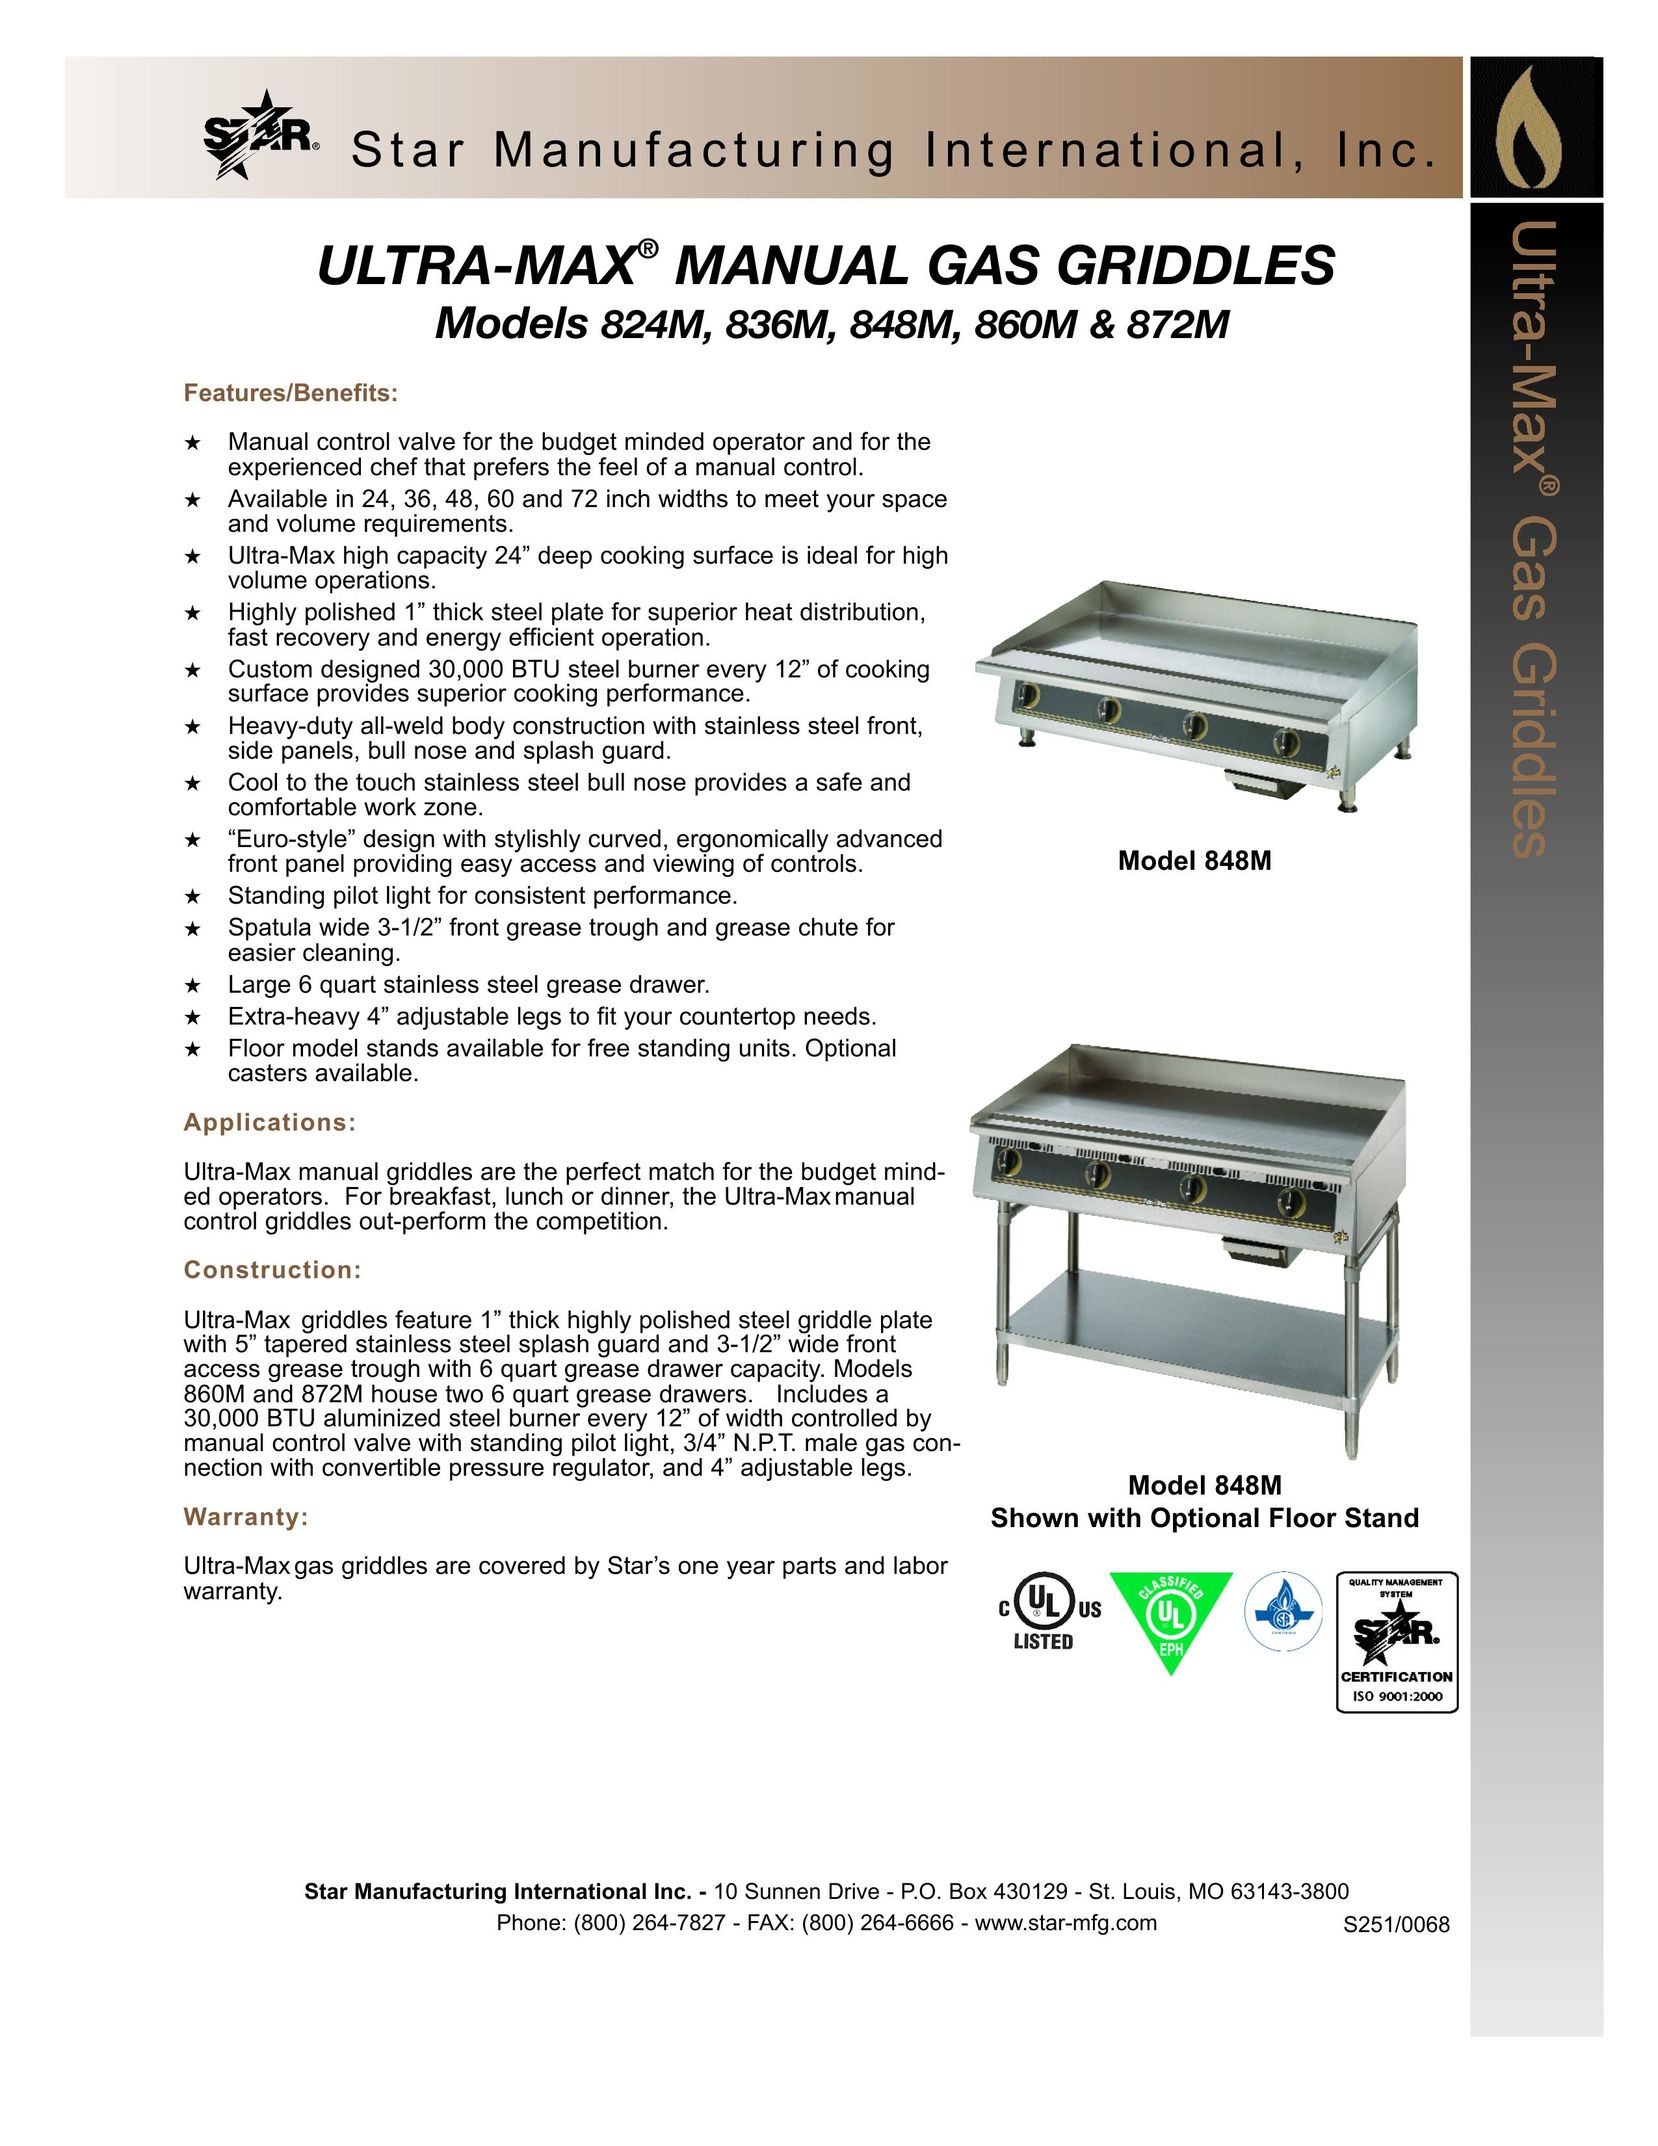 Star Manufacturing 824M Griddle User Manual